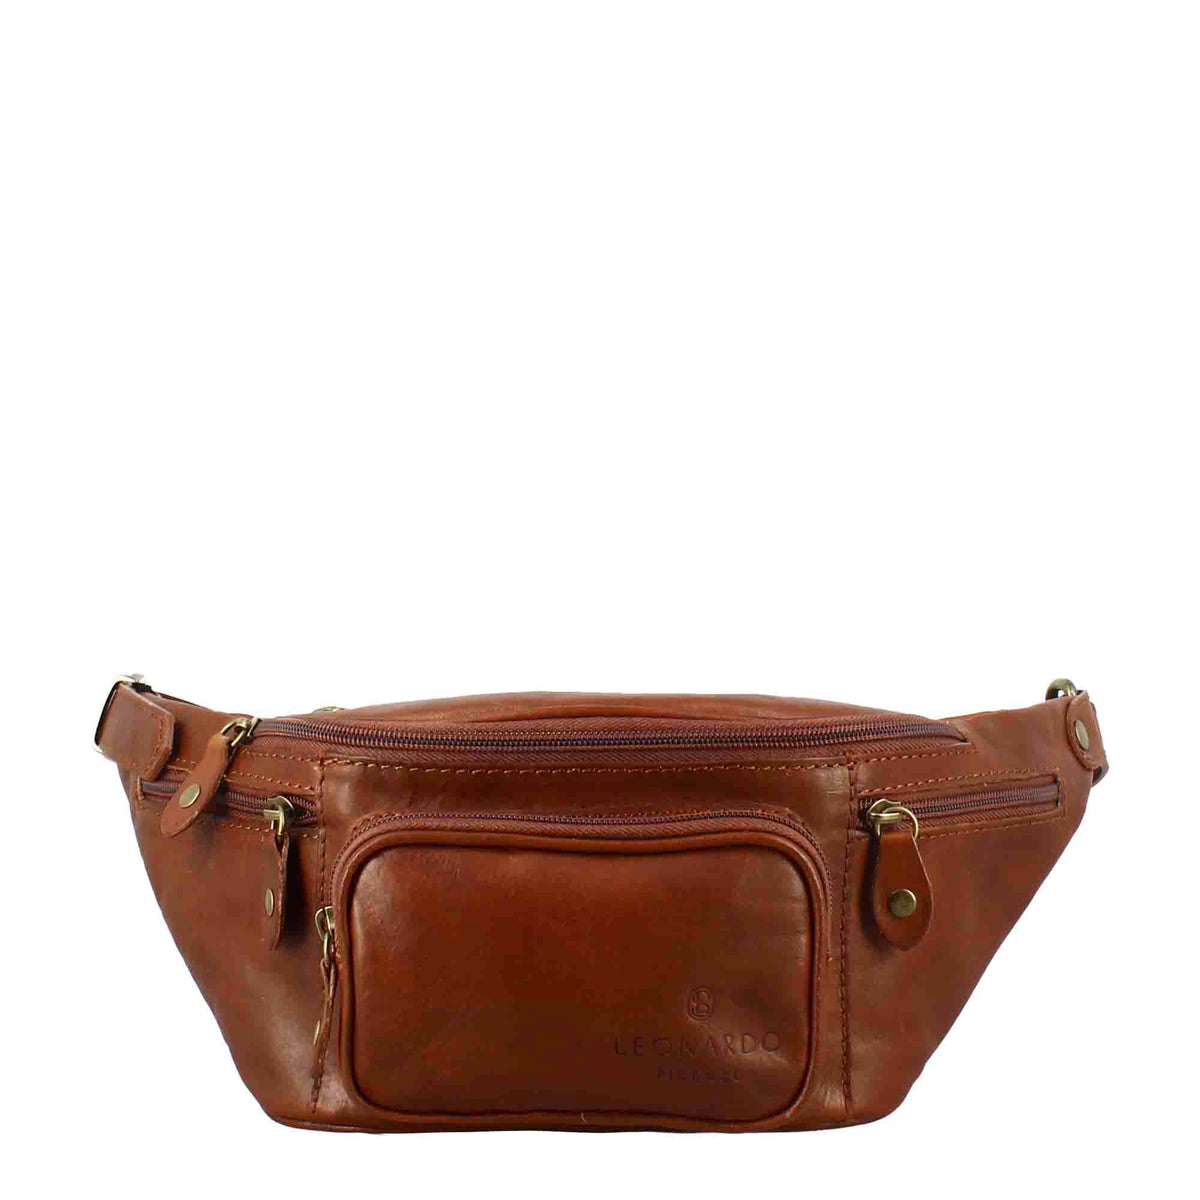 Classic men's bum bag in brown multi-pocket leather